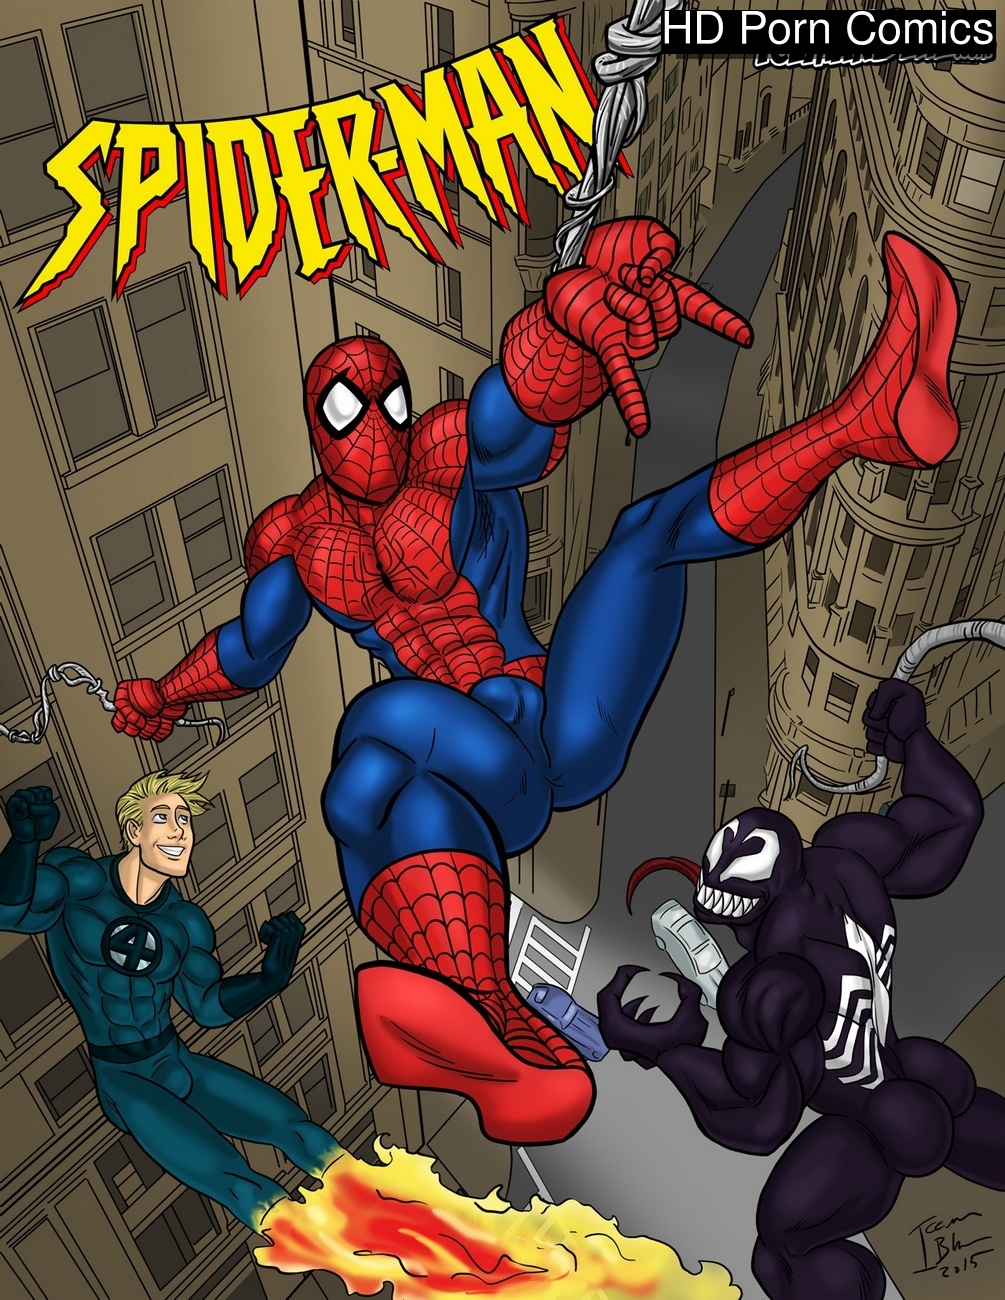 Mansex - Spider-Man Sex Comic | HD Porn Comics